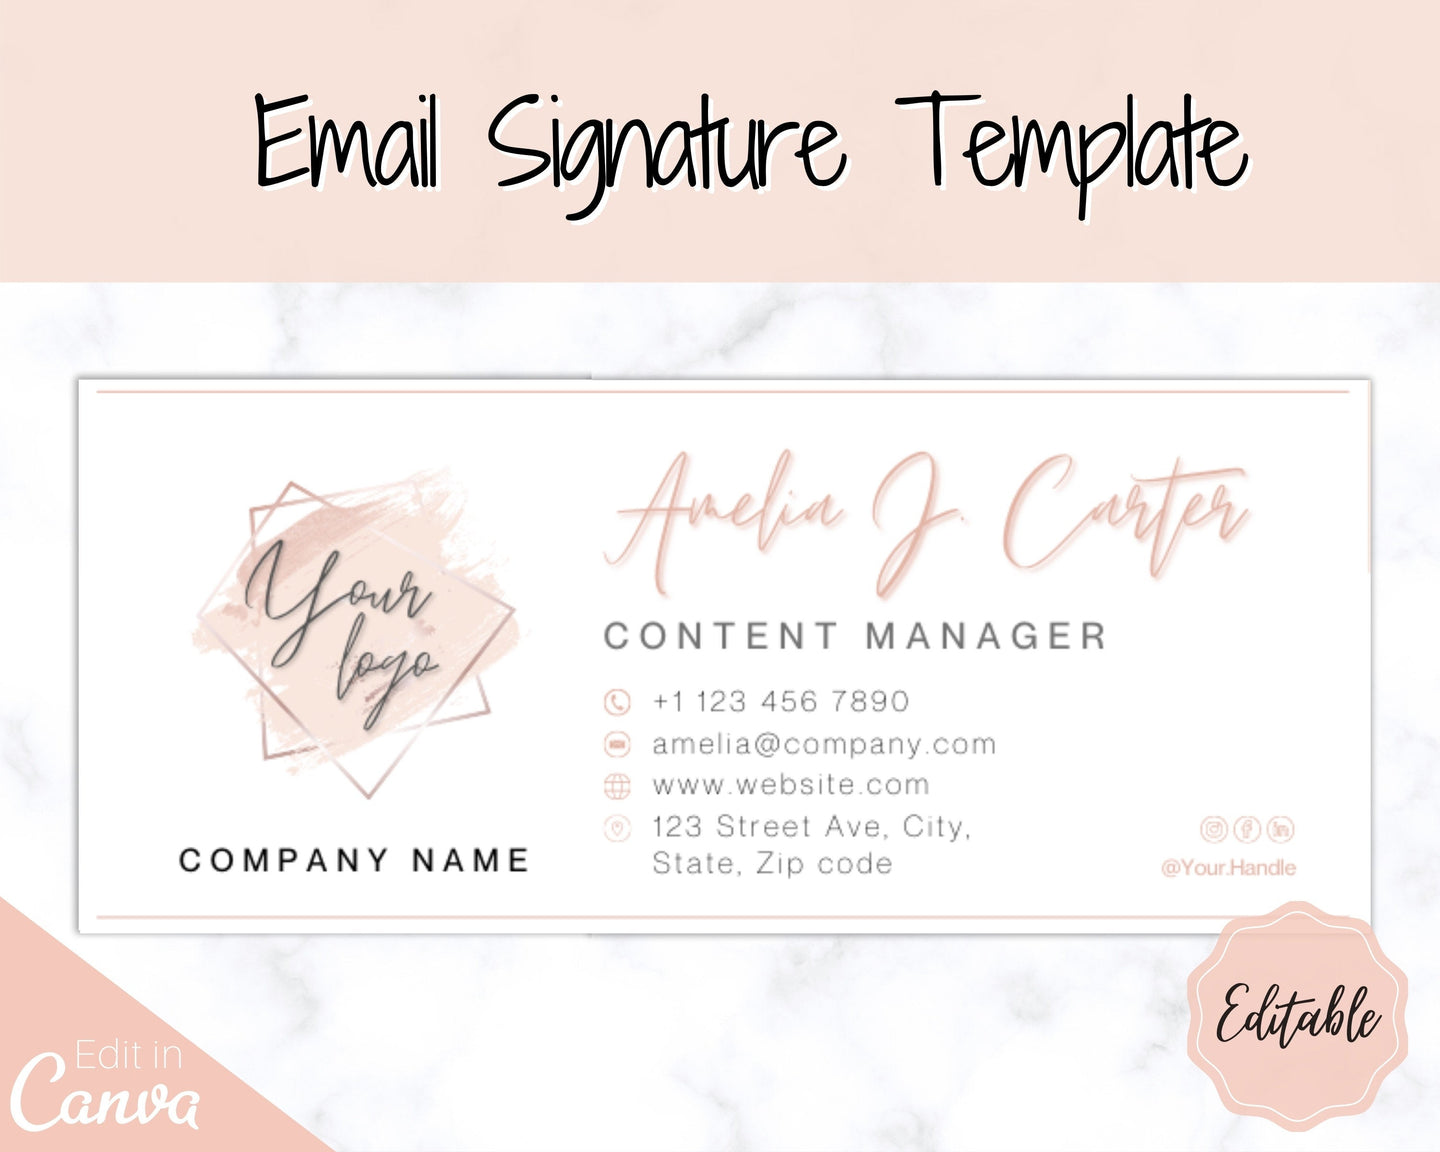 Email Signature Template with logo & photo! Editable Canva Signature Design. Minimalist, Realtor Marketing, Real Estate, Professional, Gmail | Style 11